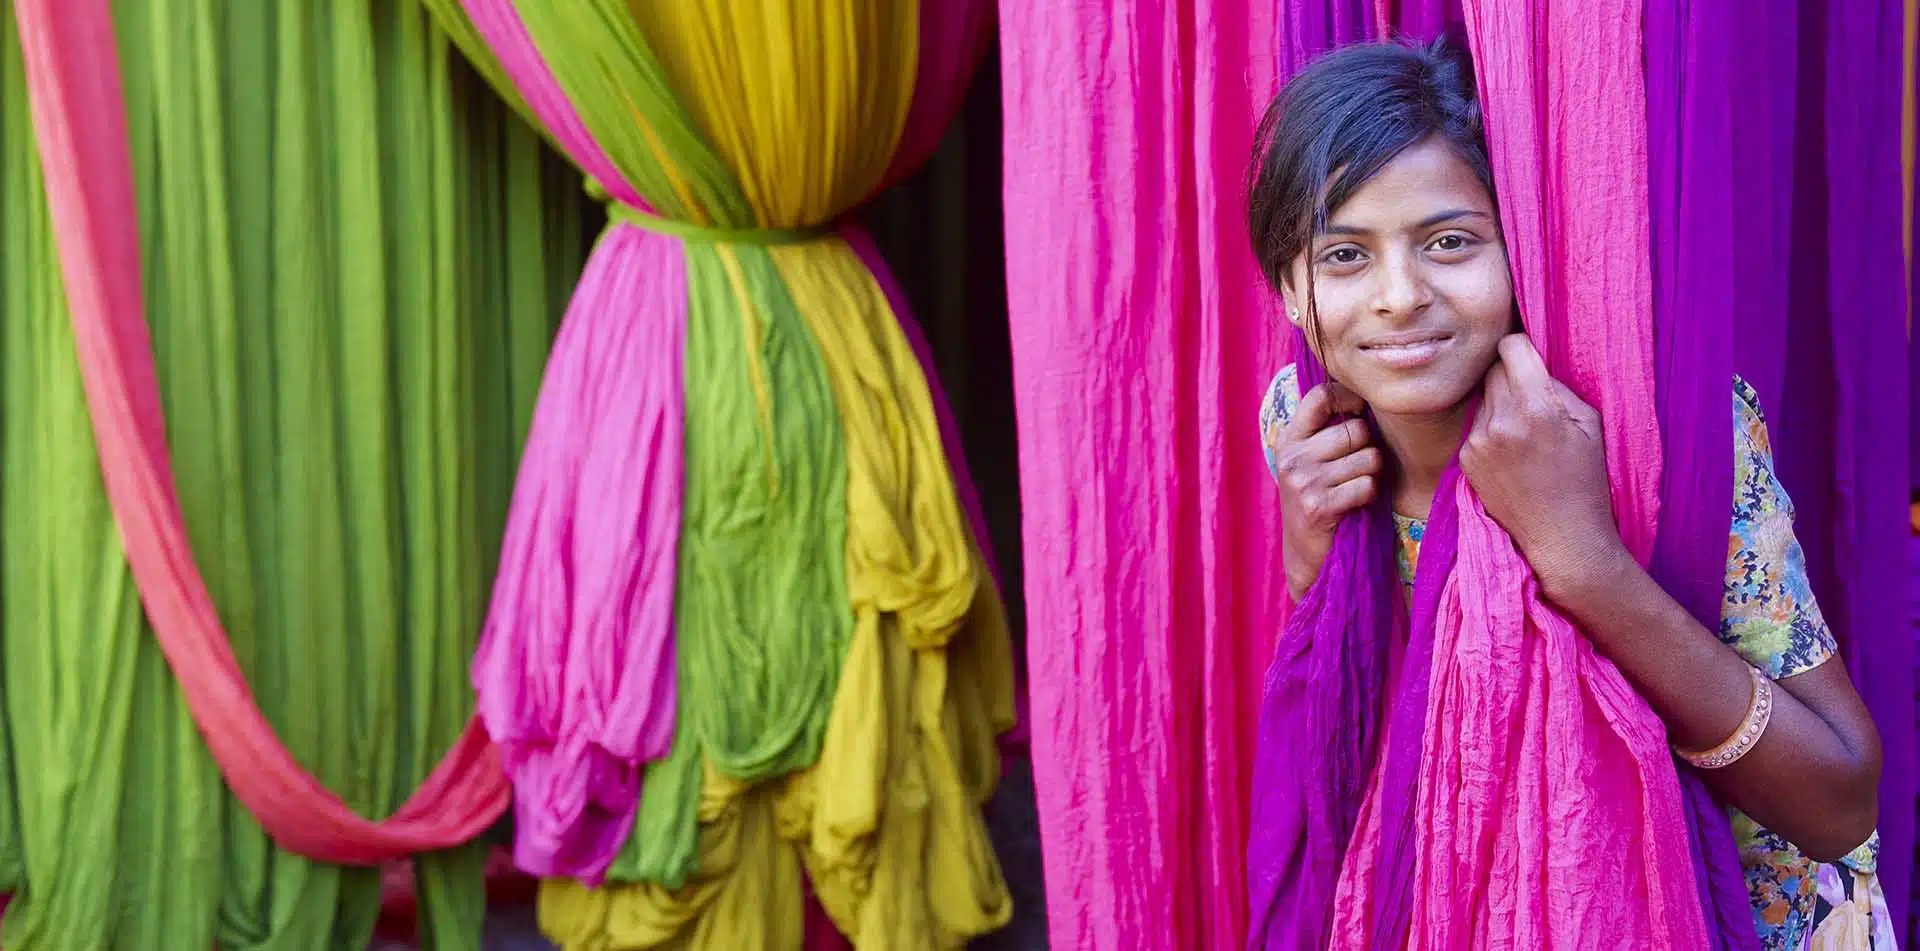 Girl Standing Among Colorful Textiles, India